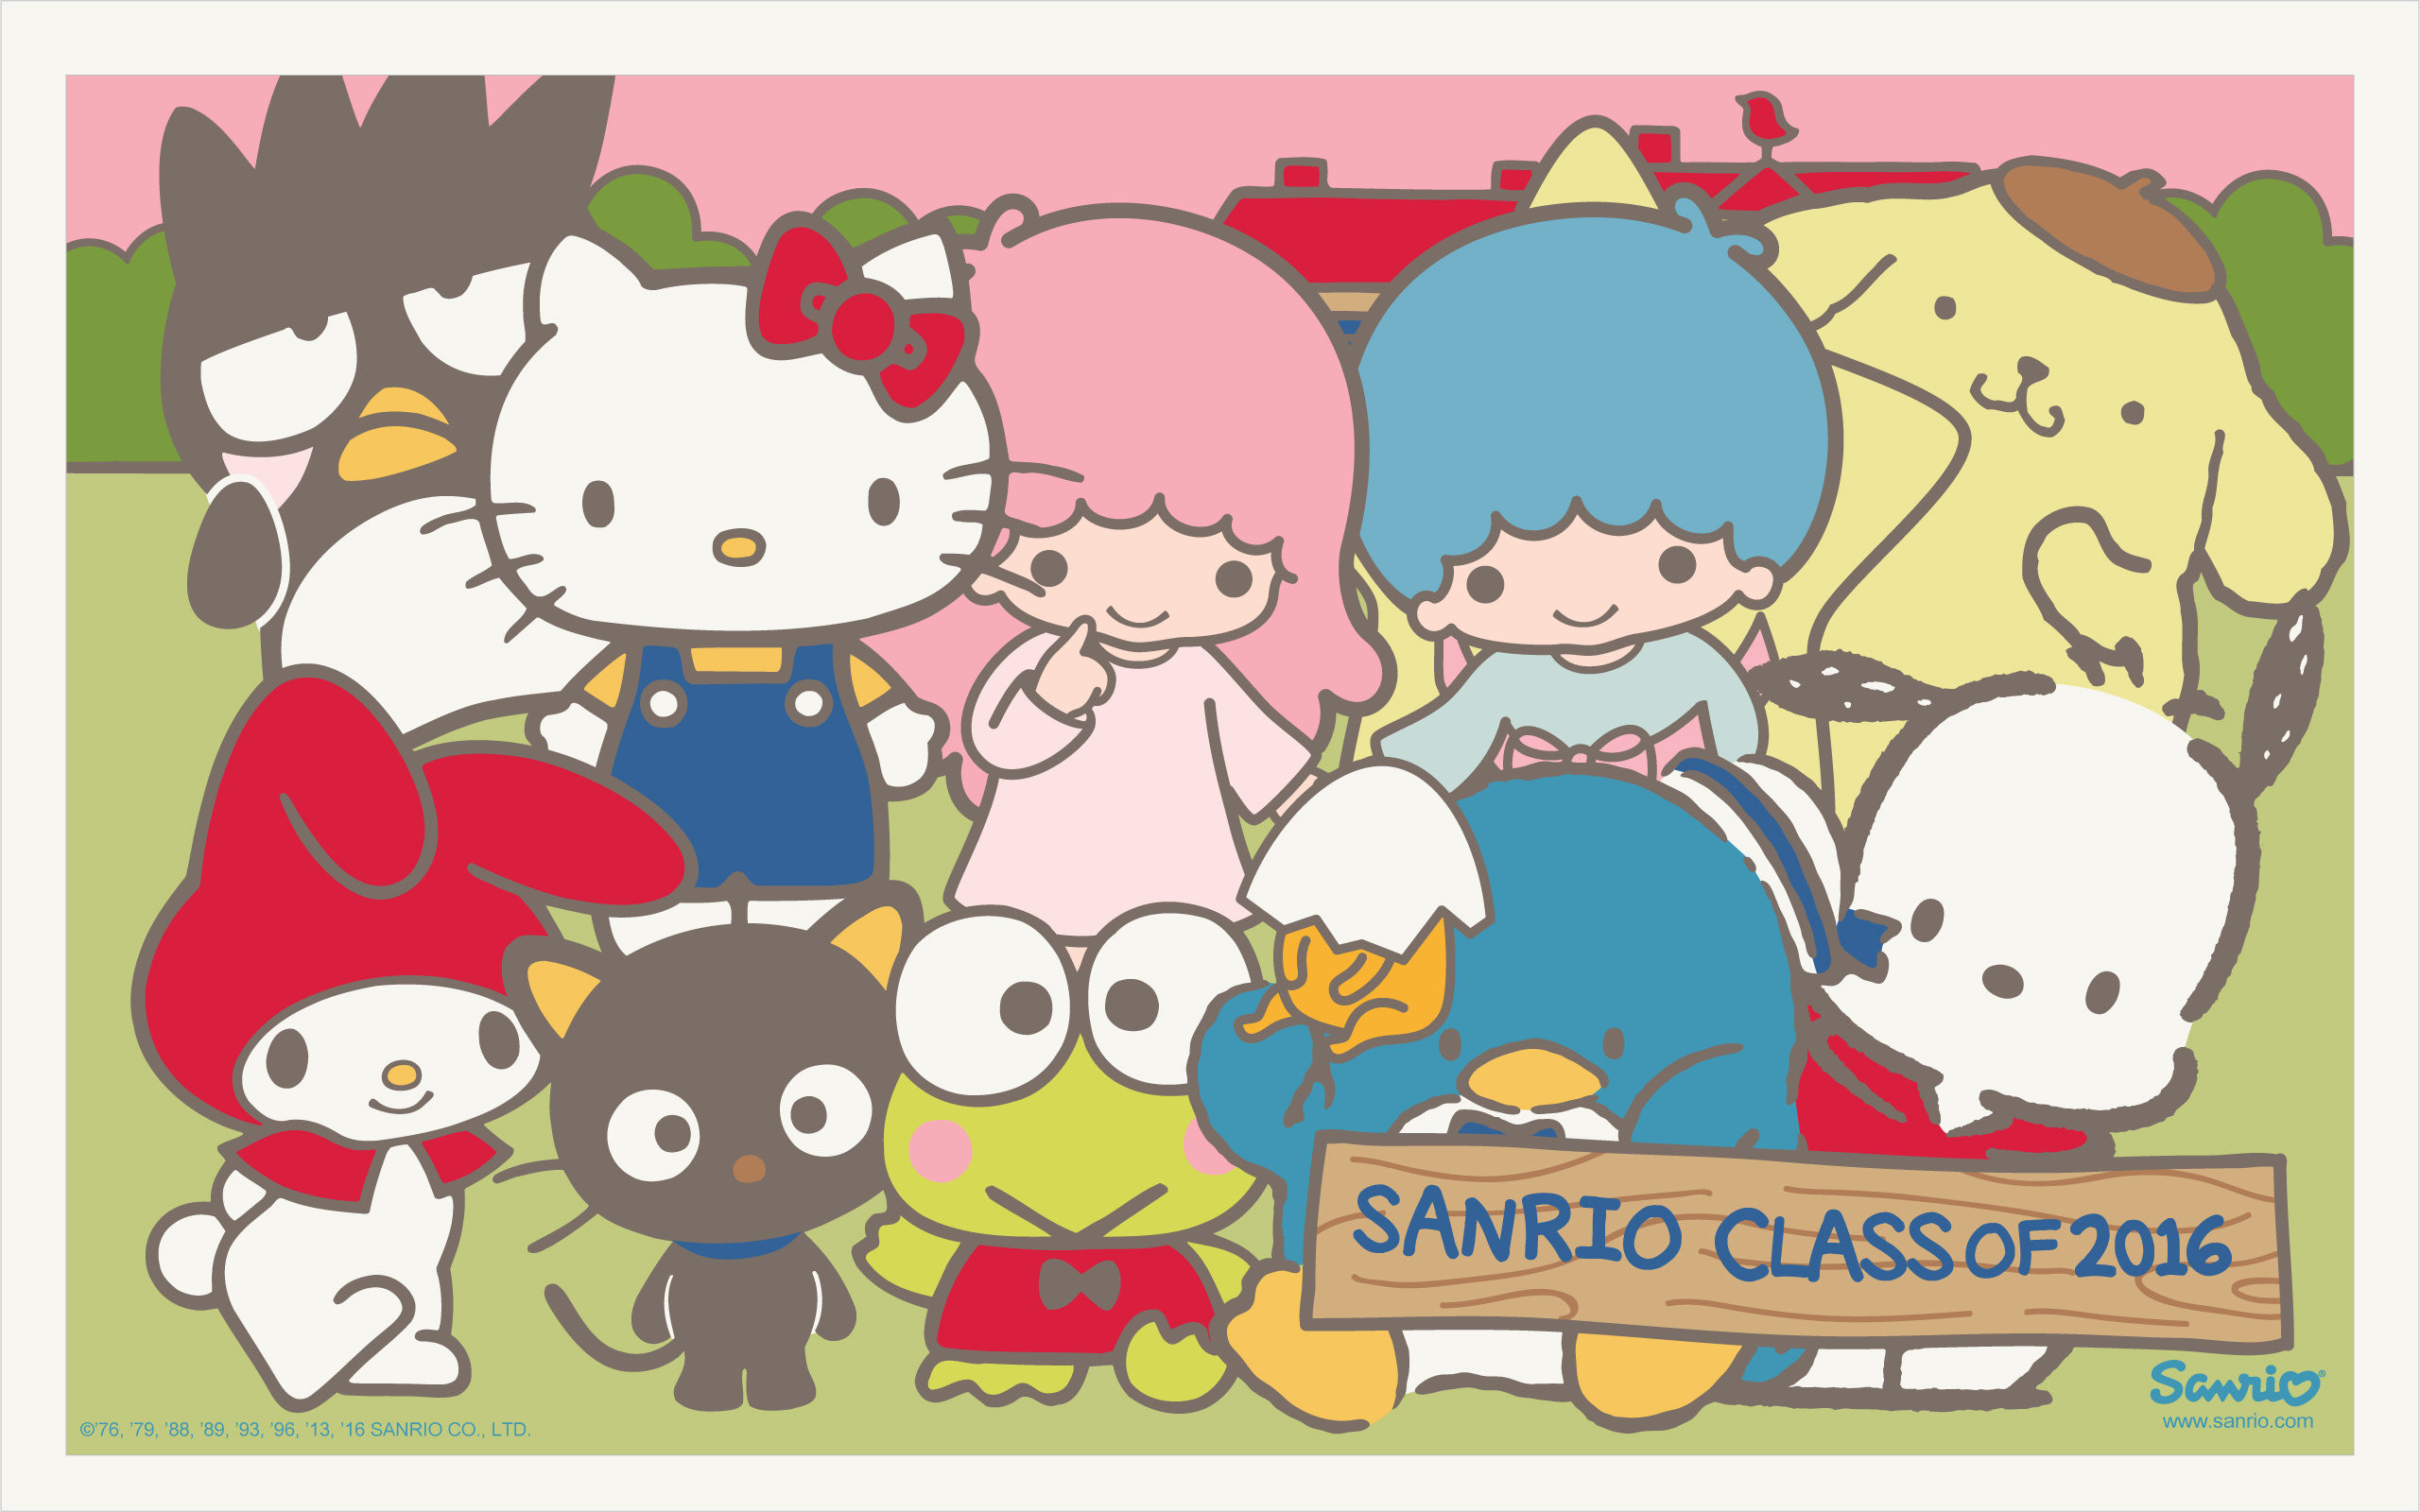 Wallpaper Laptop Sanrio / Sanrio Wallpaper (72+ images) เว็บไซต์